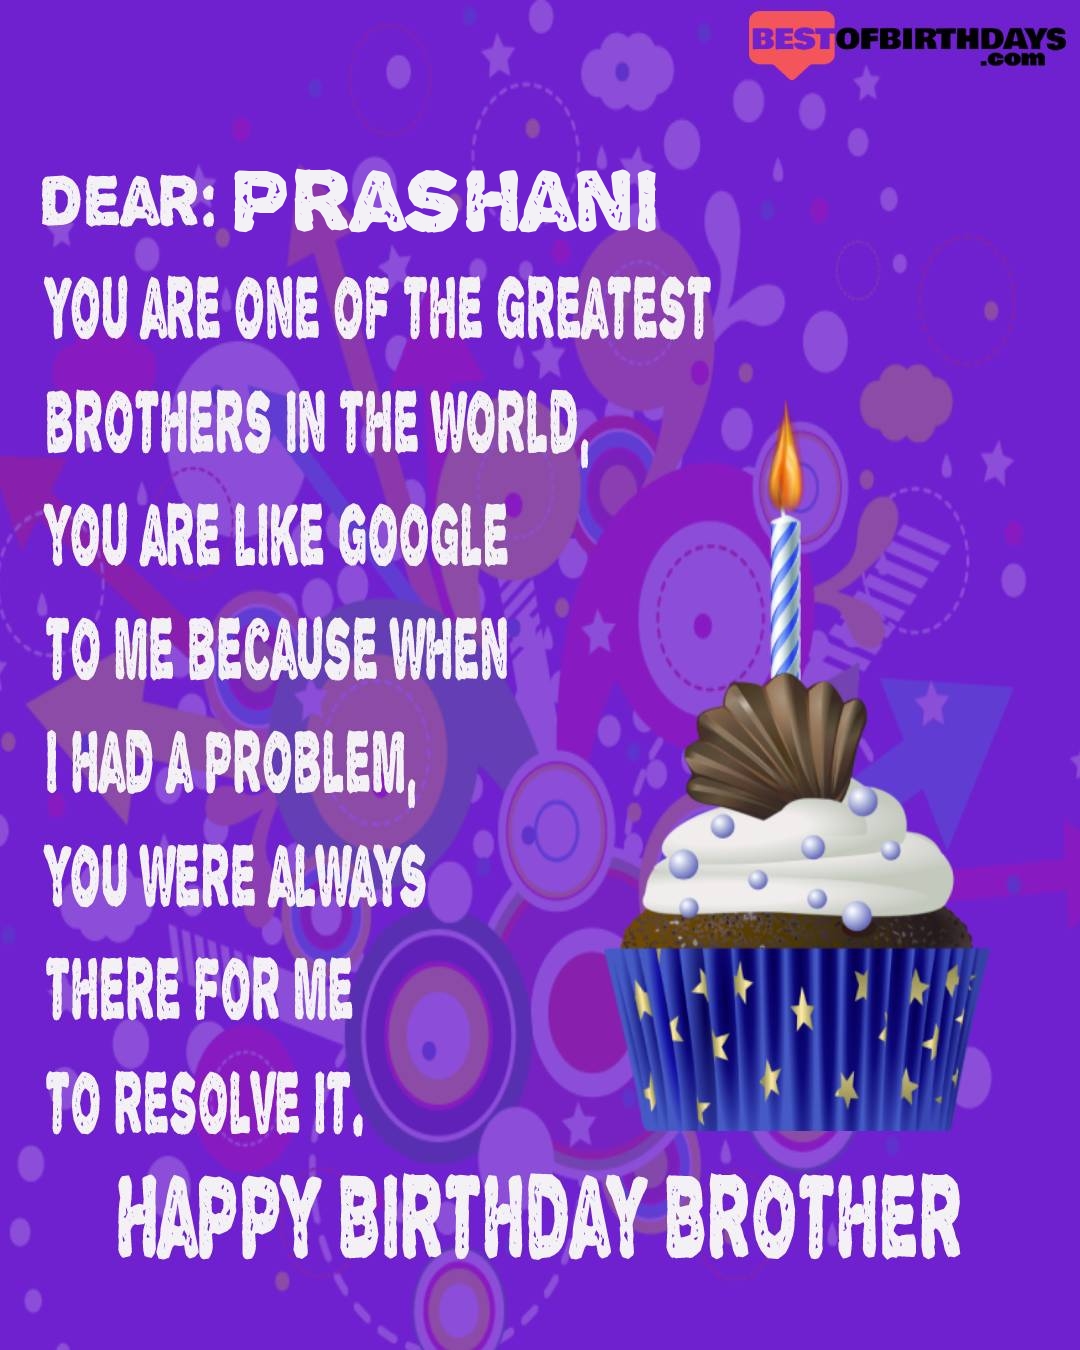 Happy birthday prashani bhai brother bro